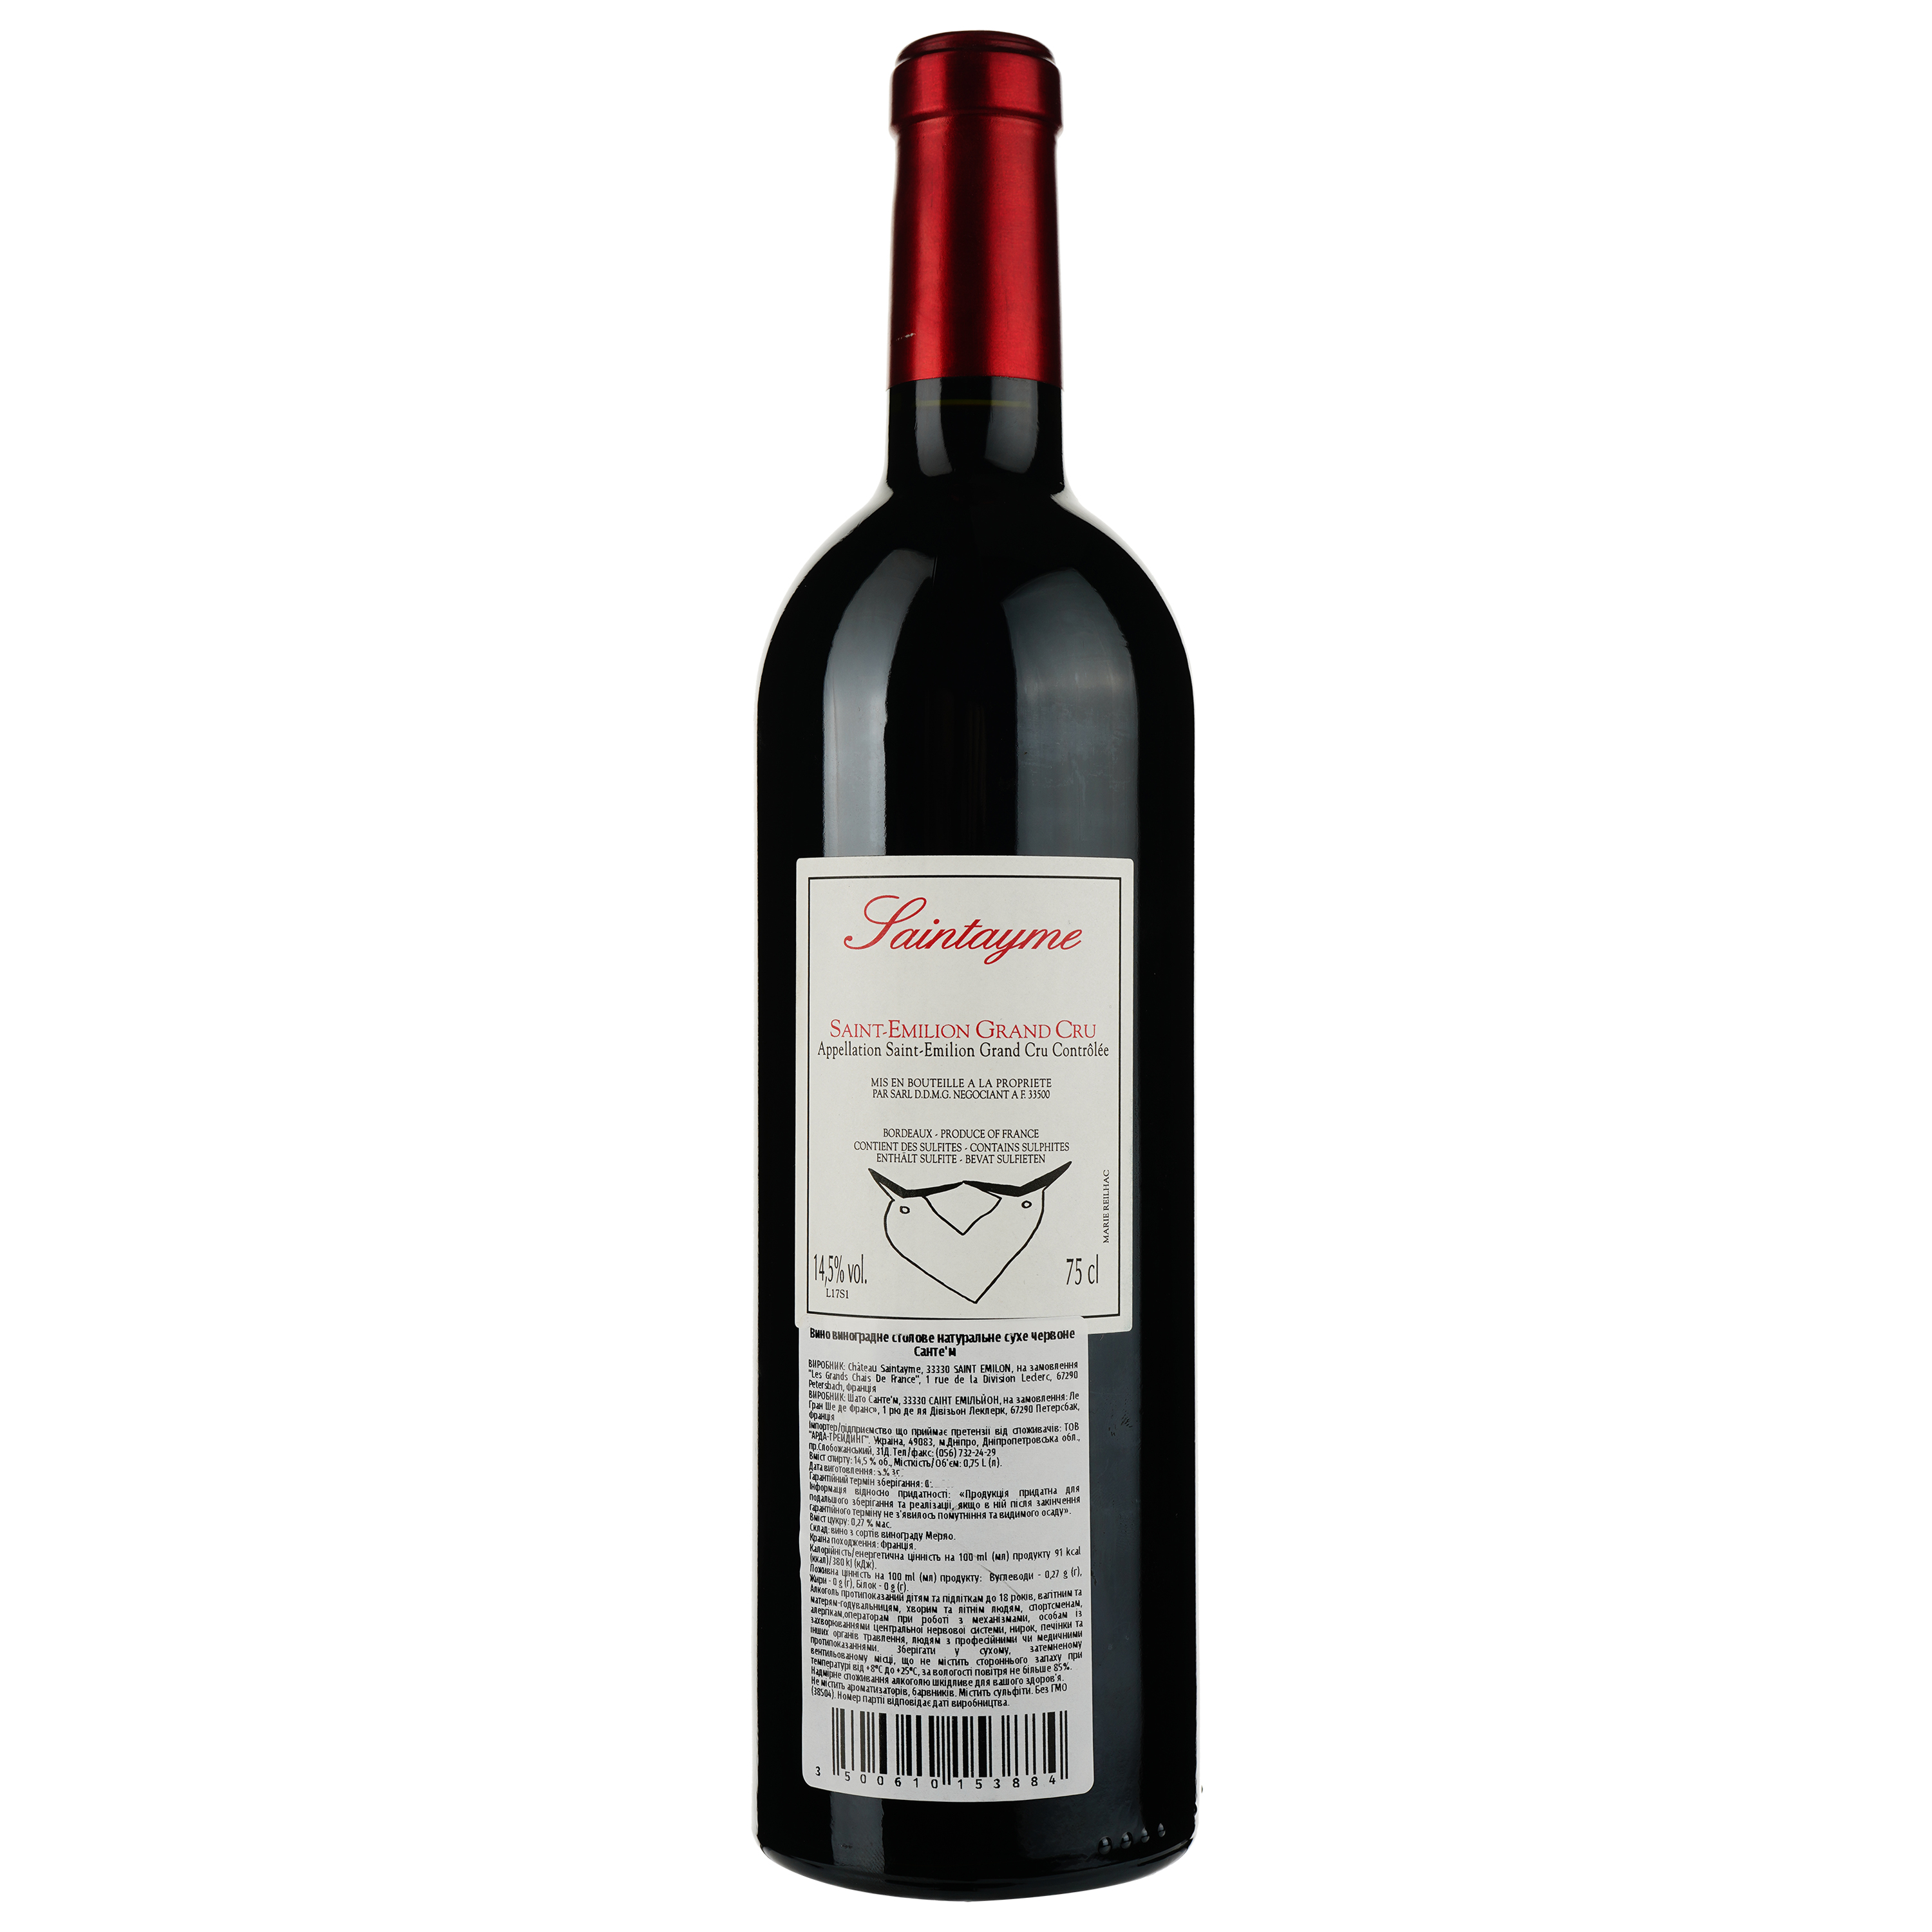 Вино Saintayme Saint-Emilion Grand Cru 2017, красное, сухое, 0.75 л - фото 2